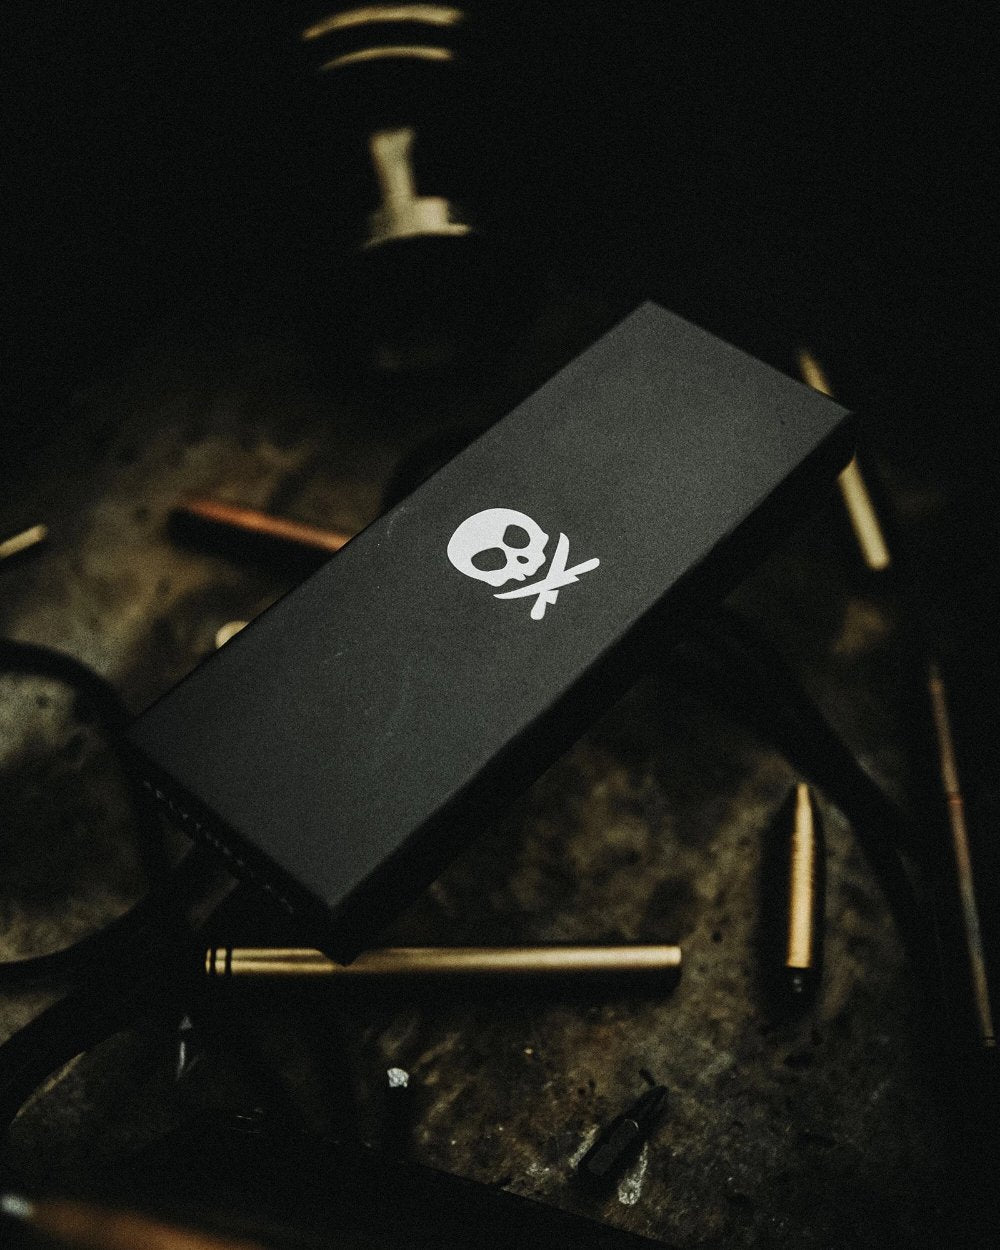 Pirate Pocket Pro (Pre-Order)